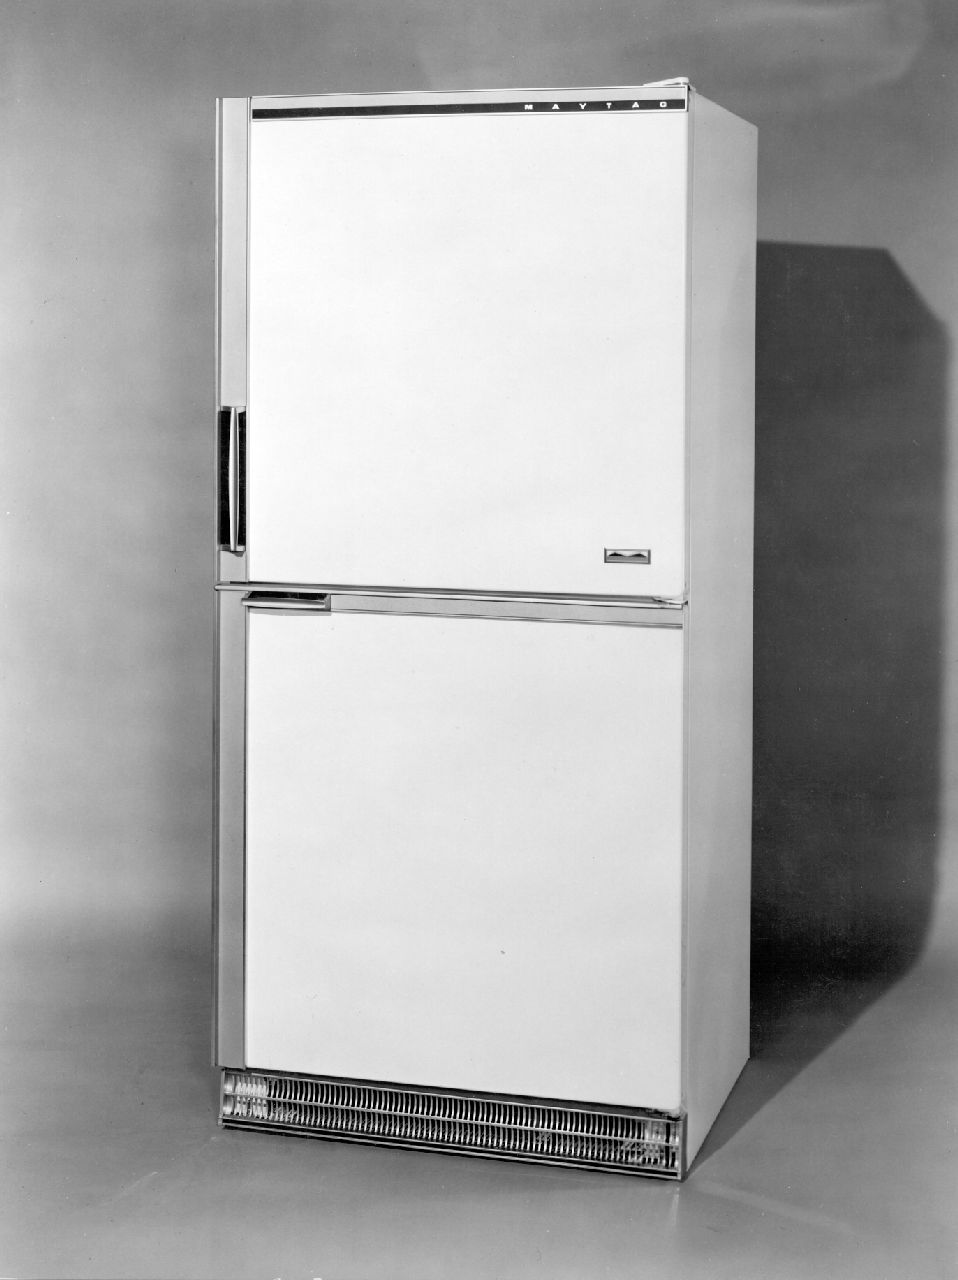 Maytag Model Refrigerator